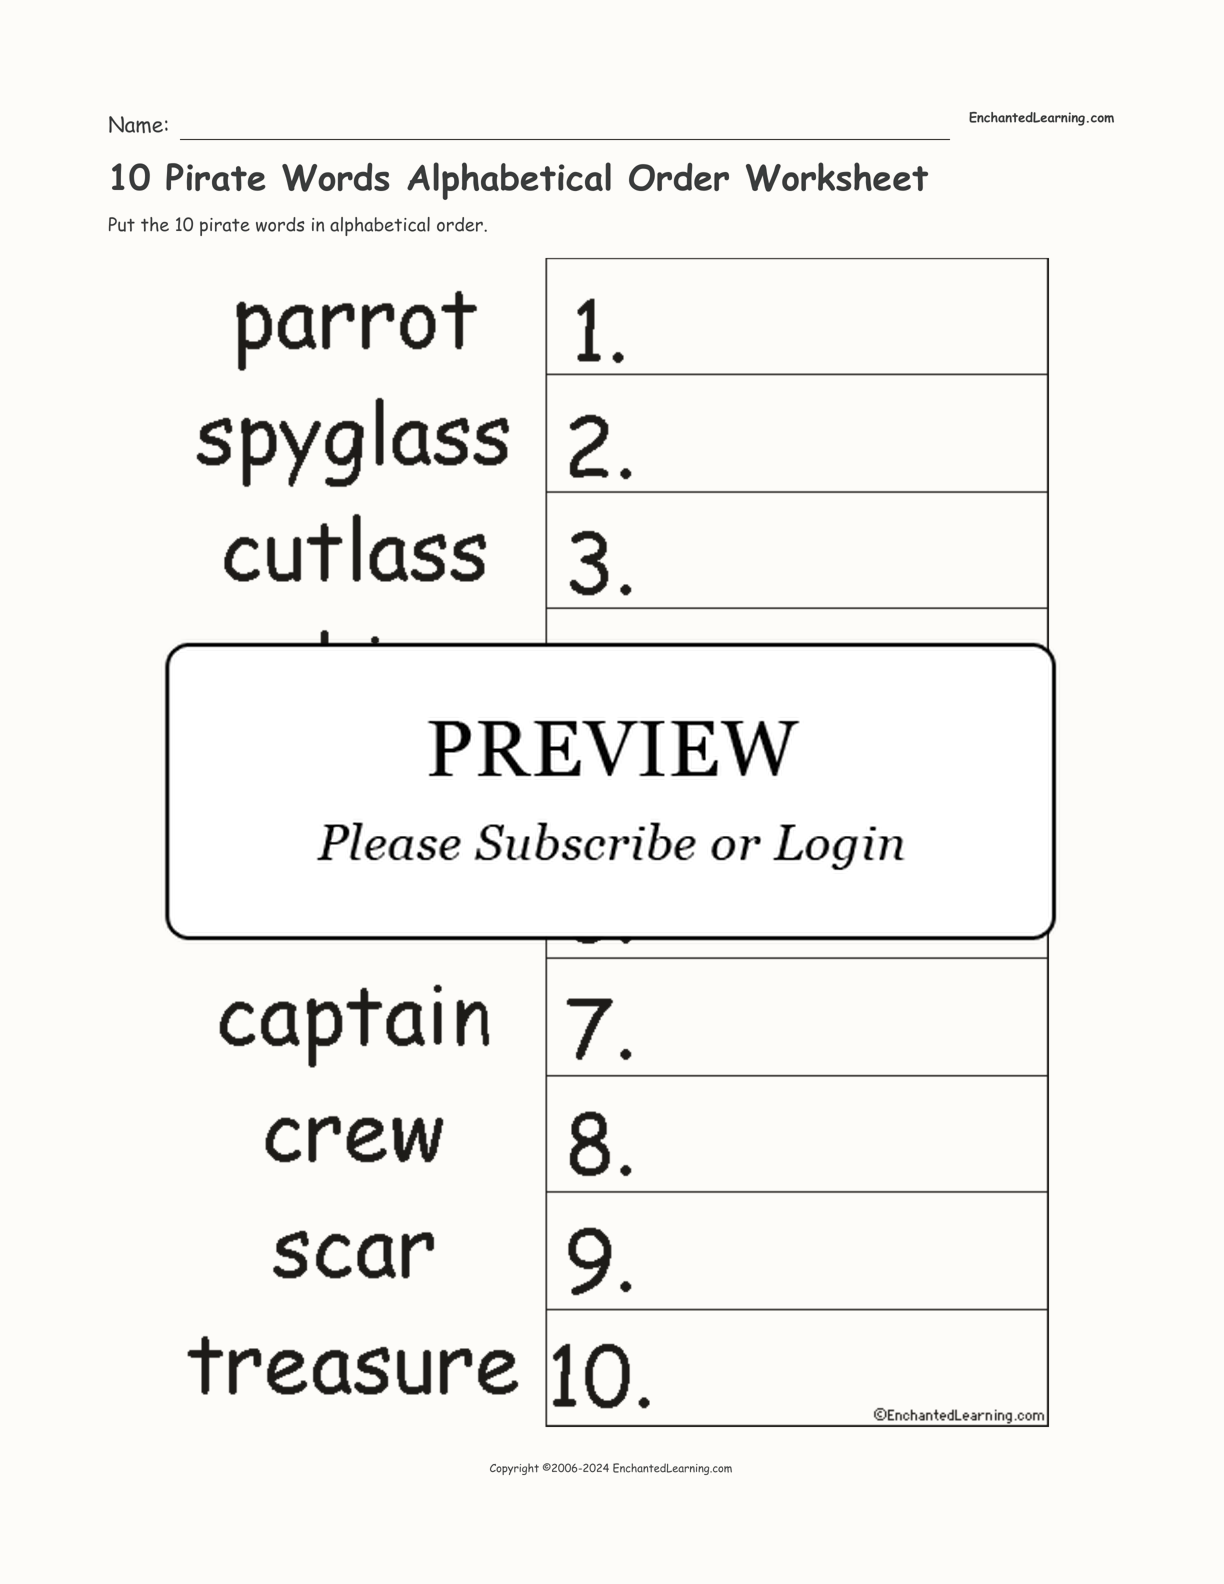 10 Pirate Words Alphabetical Order Worksheet interactive worksheet page 1